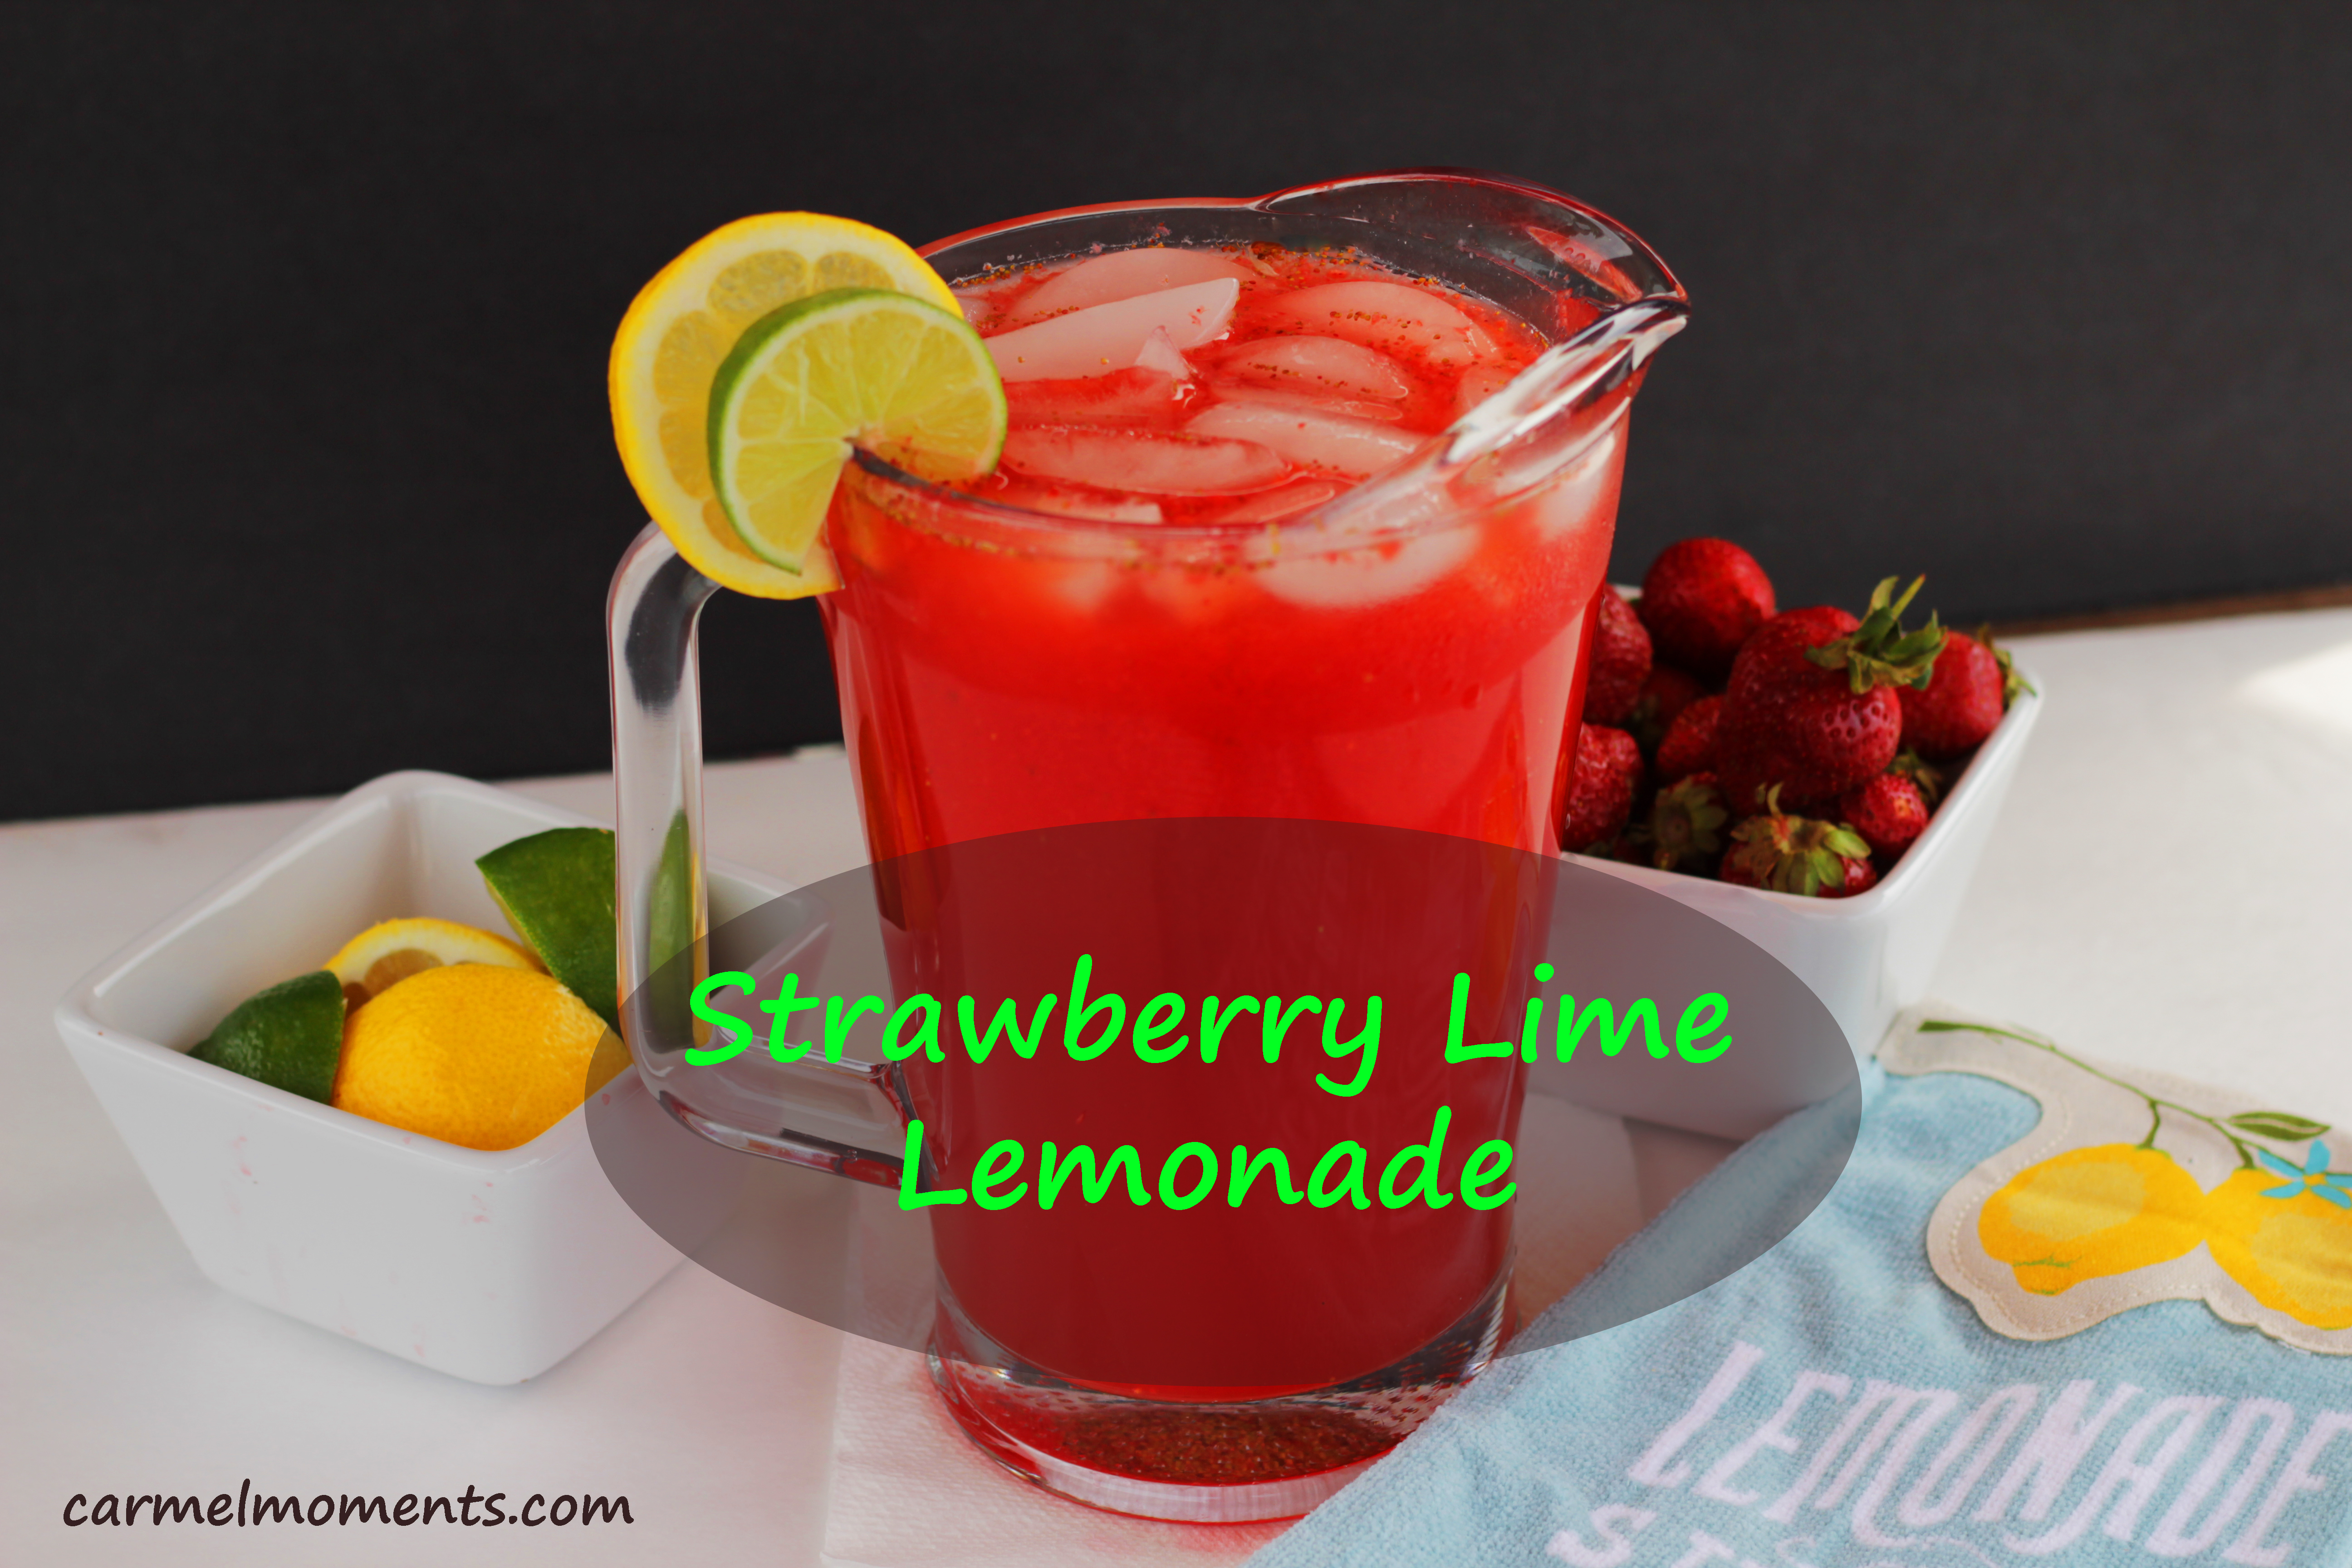 https://gatherforbread.com/strawberry-lime-lemonade/